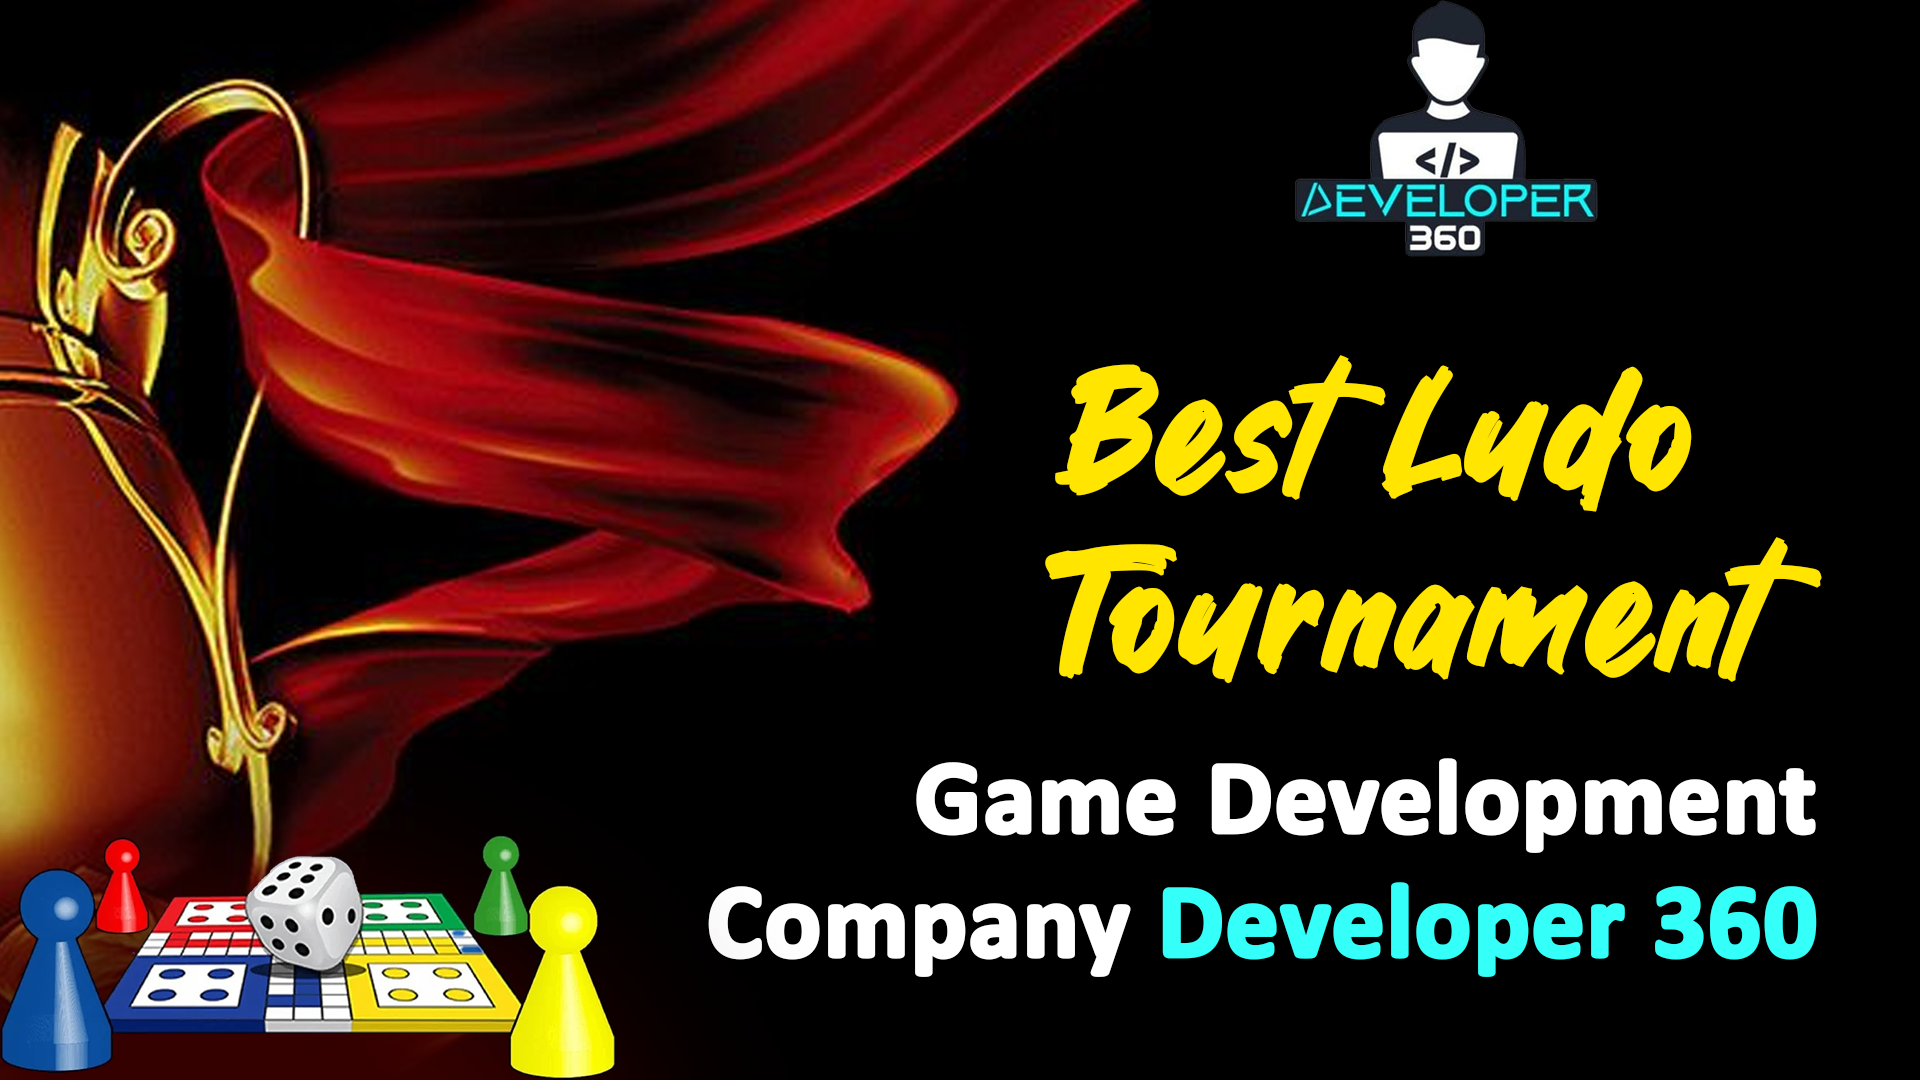 Best Ludo Tournament Game Development Company